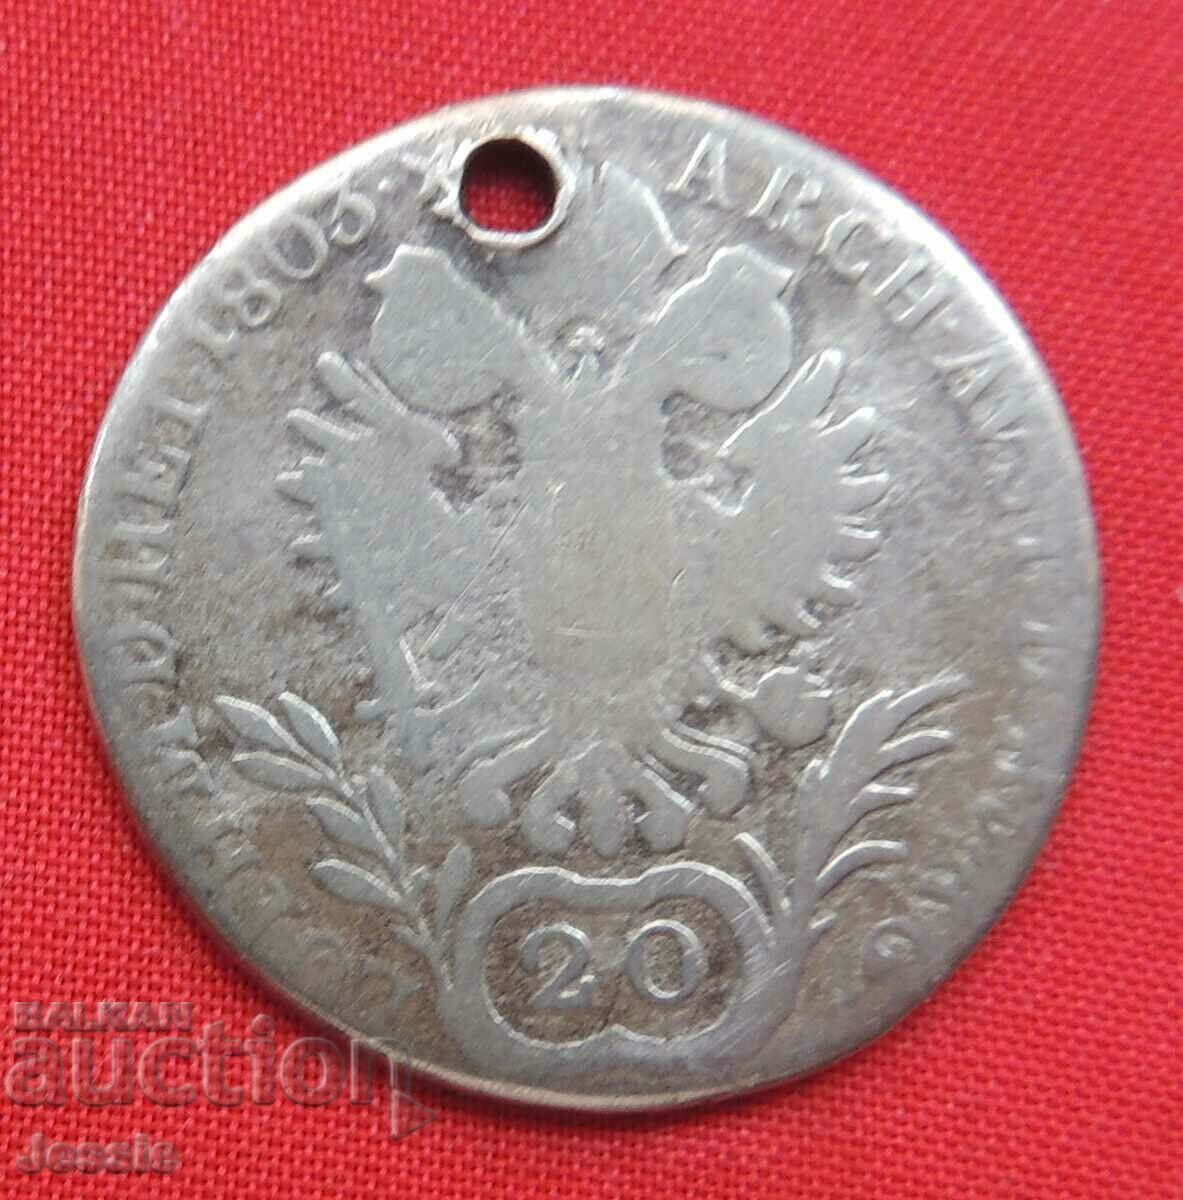 20 Kreuzer Austria-Hungary 1803 G Silver - Franz II